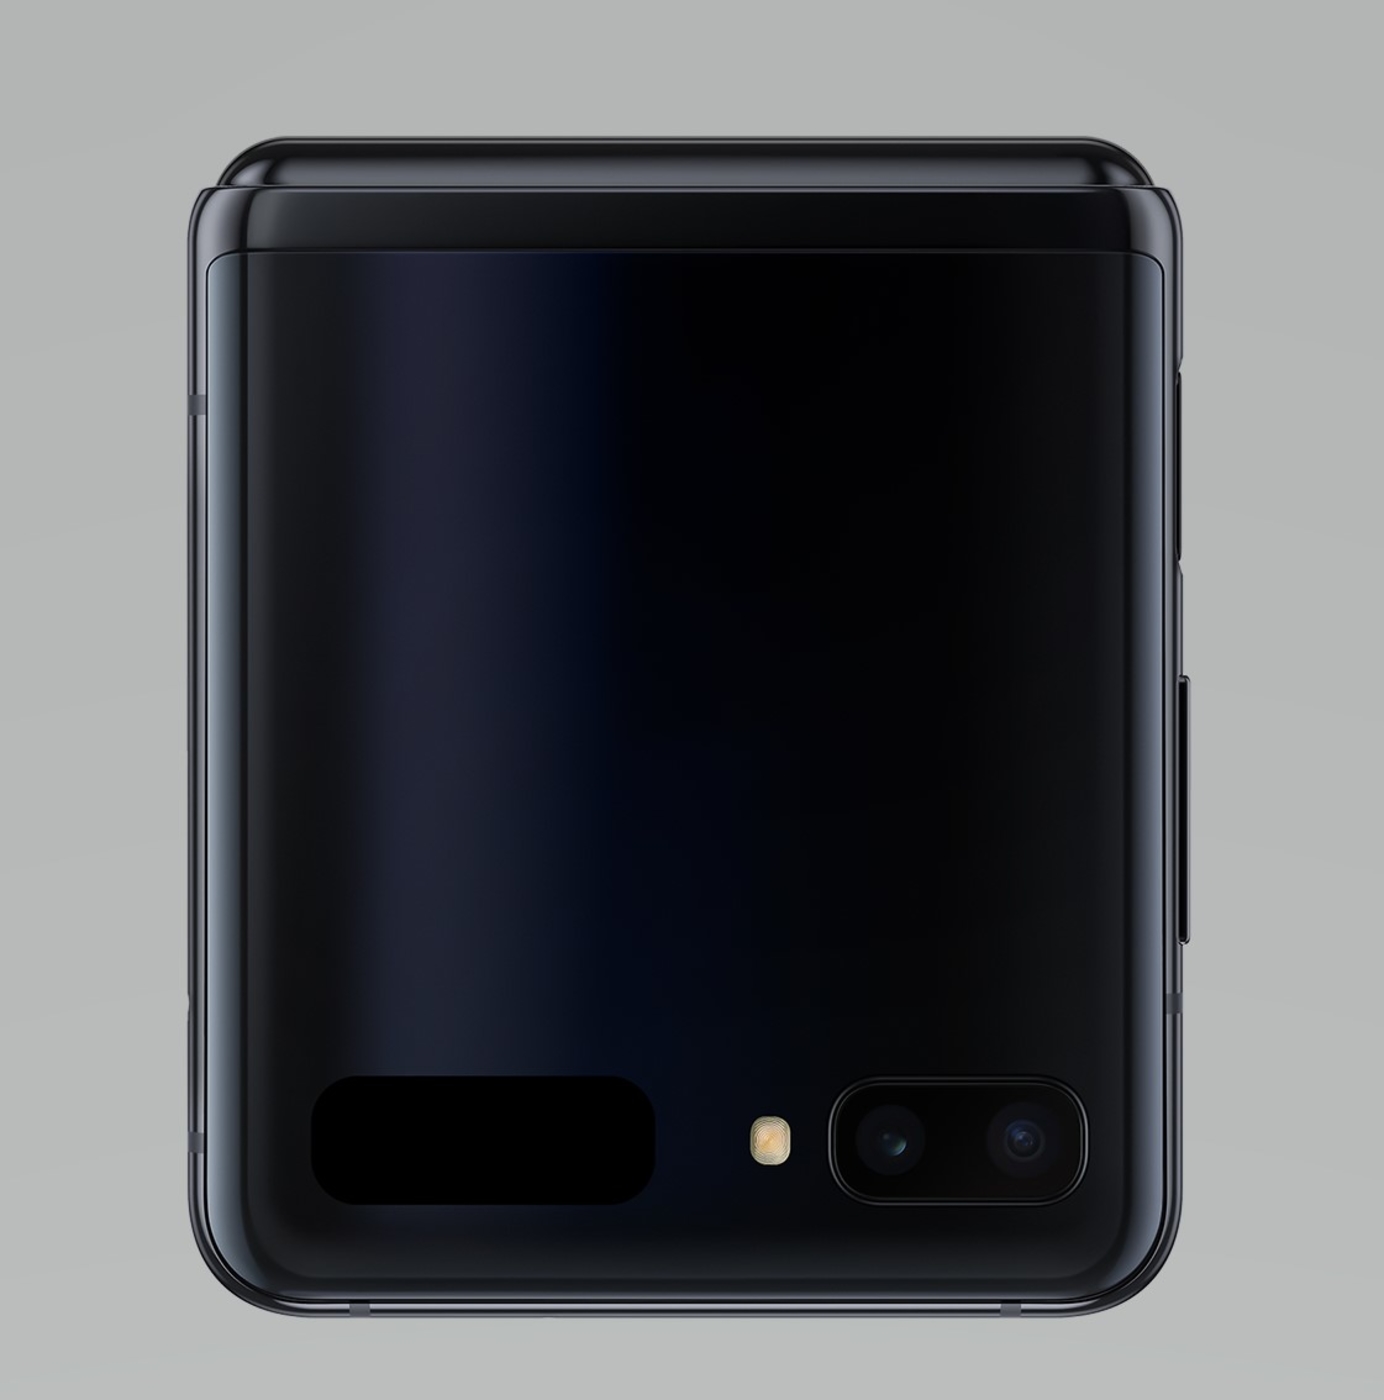 Celular SAMSUNG Galaxy Z FLIP 256GB Negro - Mirror Black + Galaxy Buds Plus Negros